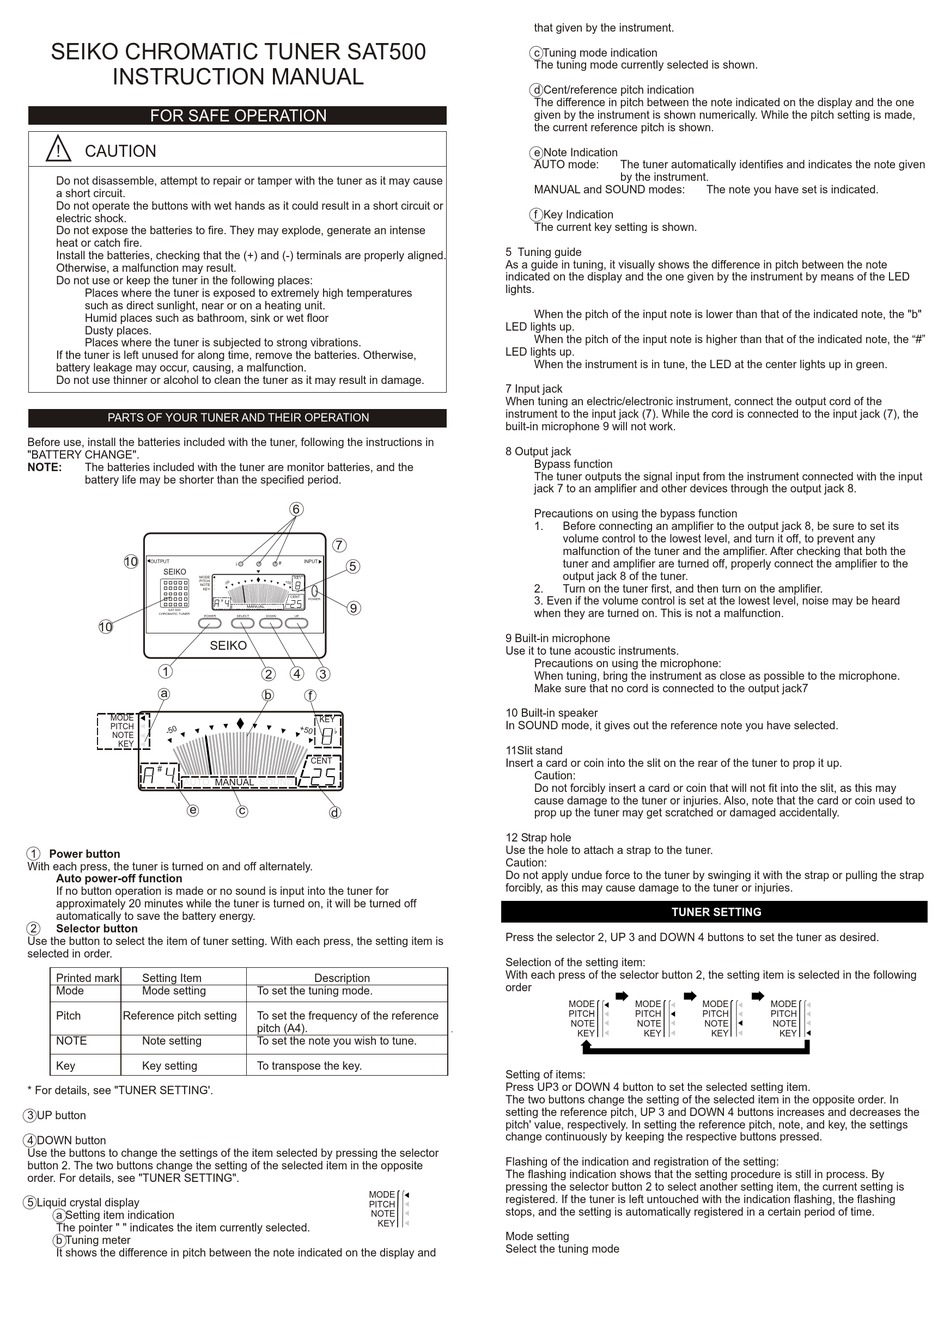 SEIKO SAT500 INSTRUCTION MANUAL Pdf Download | ManualsLib